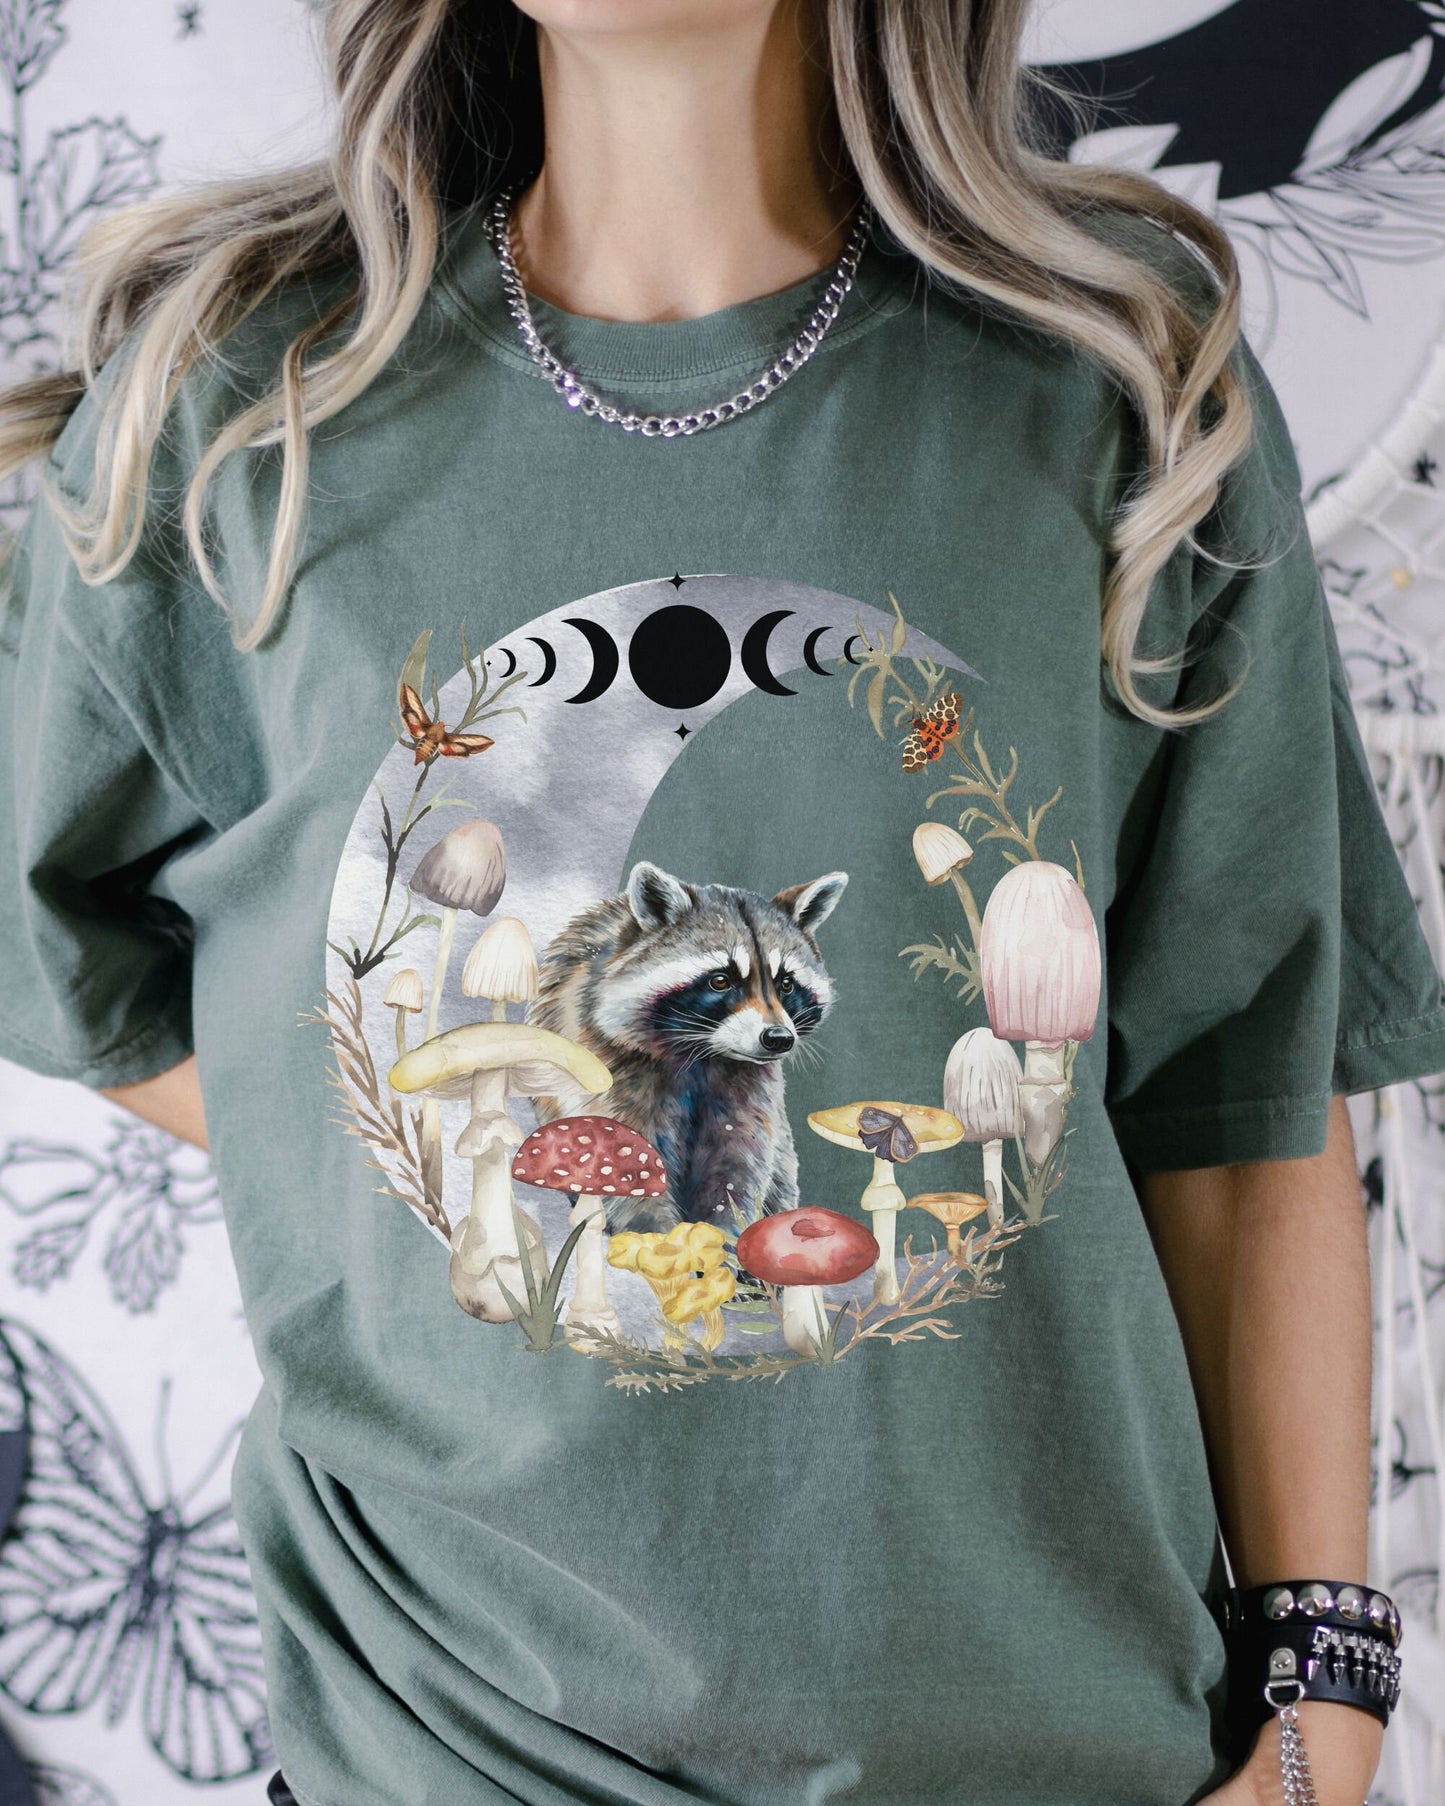 Raccoon Shirt Dark Cottagecore Moth Shirt Mushroom Shirt Moon Phases Goblincore Shirt Forestcore Shirt Cottage Core T Shirt Racoon Shirt